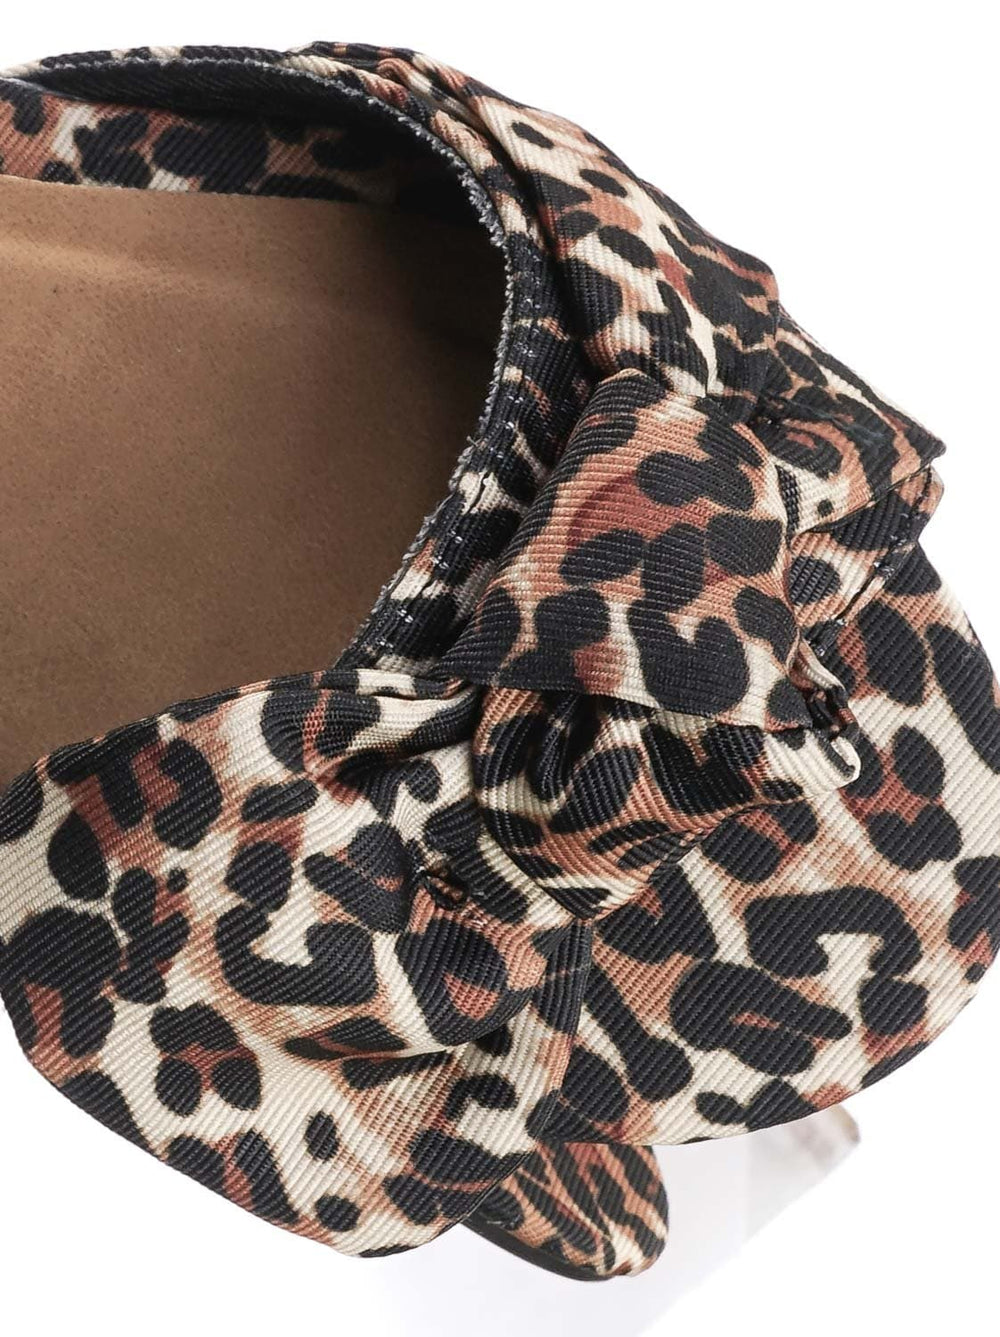 leopard open toe flats